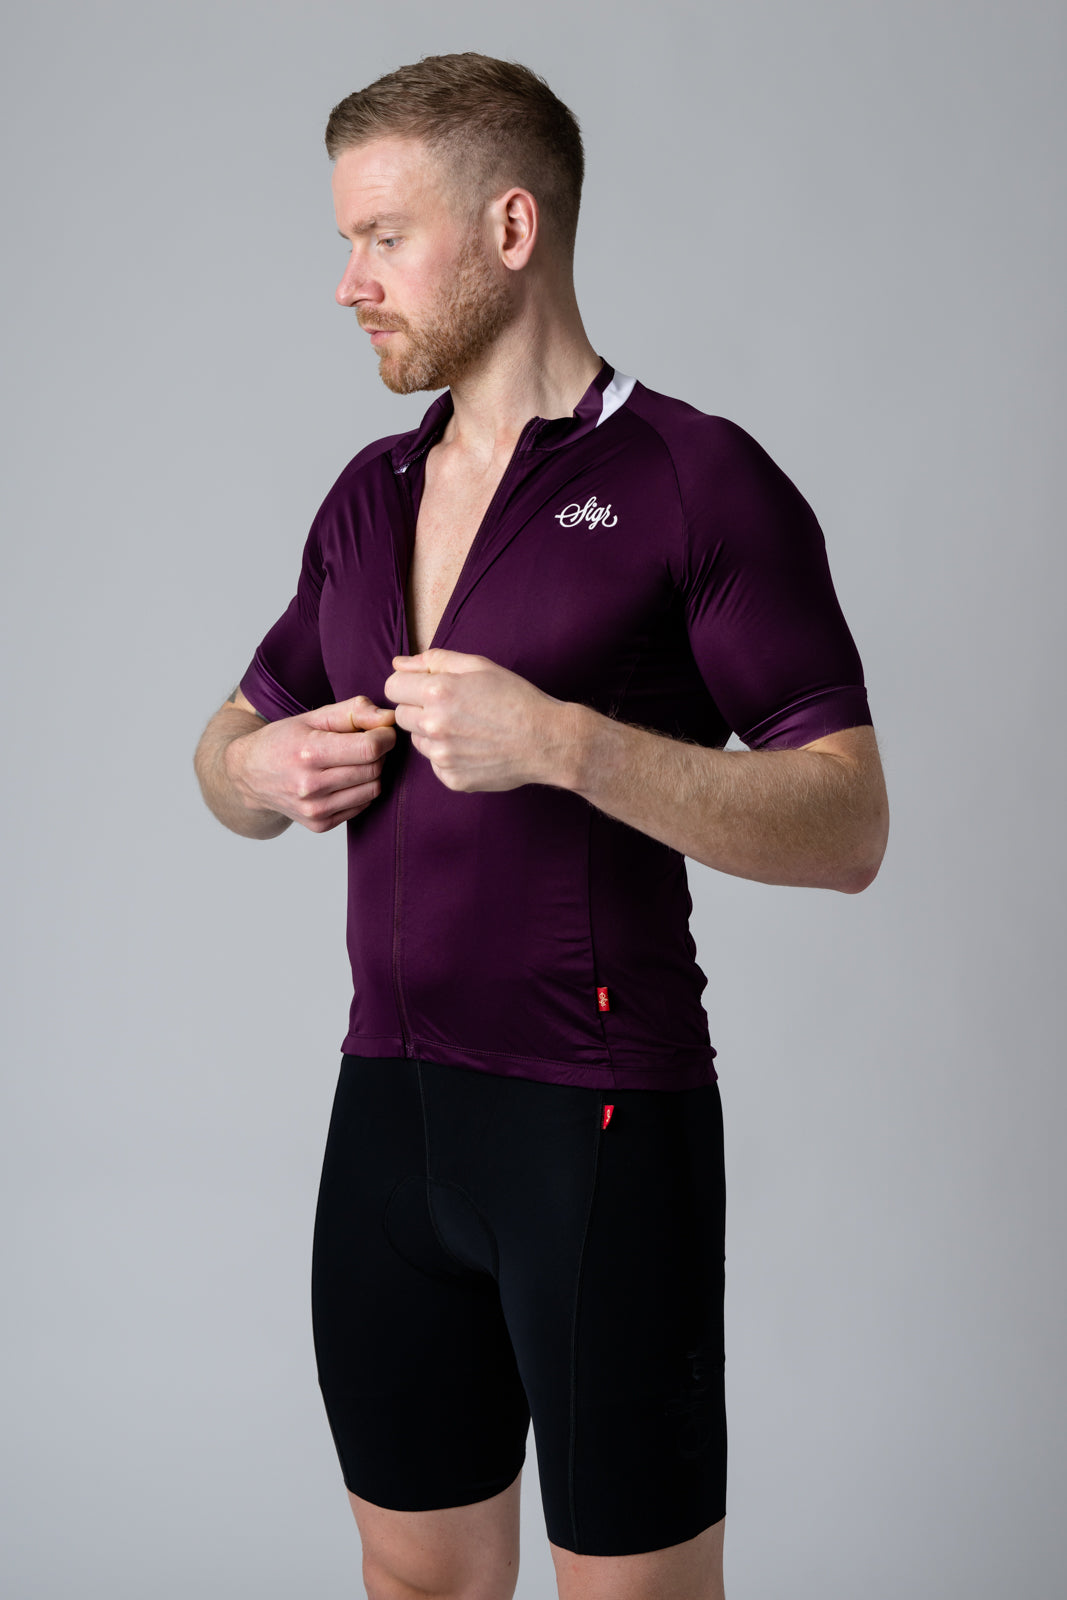 Sigr Lila Hortensia - Purple Cycling Jersey for Men